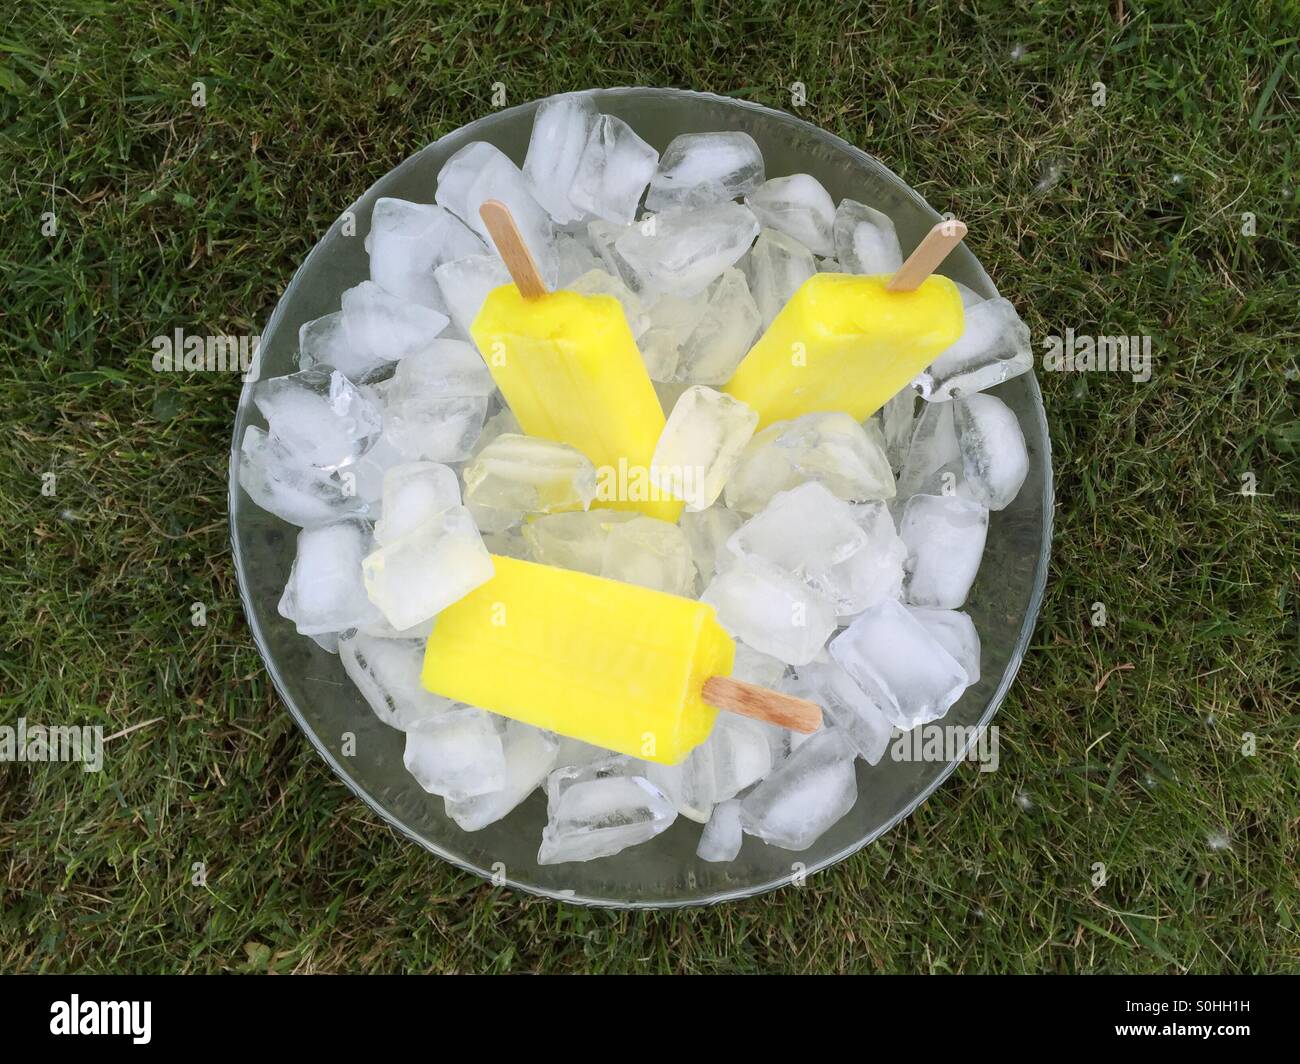 Frozen popsicles treats Stock Photo